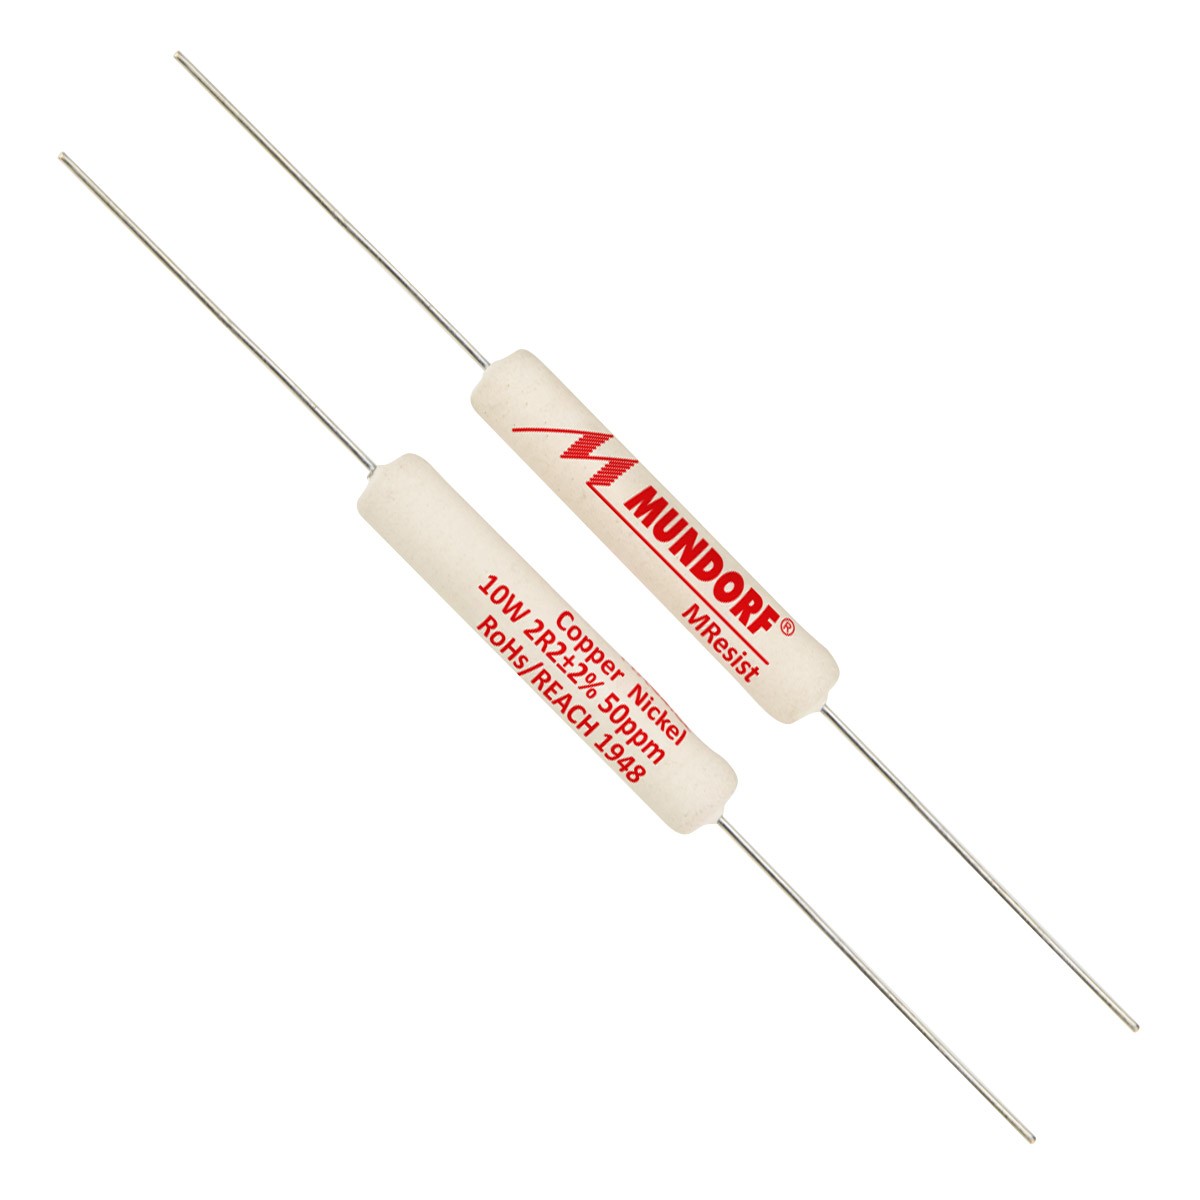 MUNDORF MRESIST CLASSIC Resistor 10W 1.2 Ohm